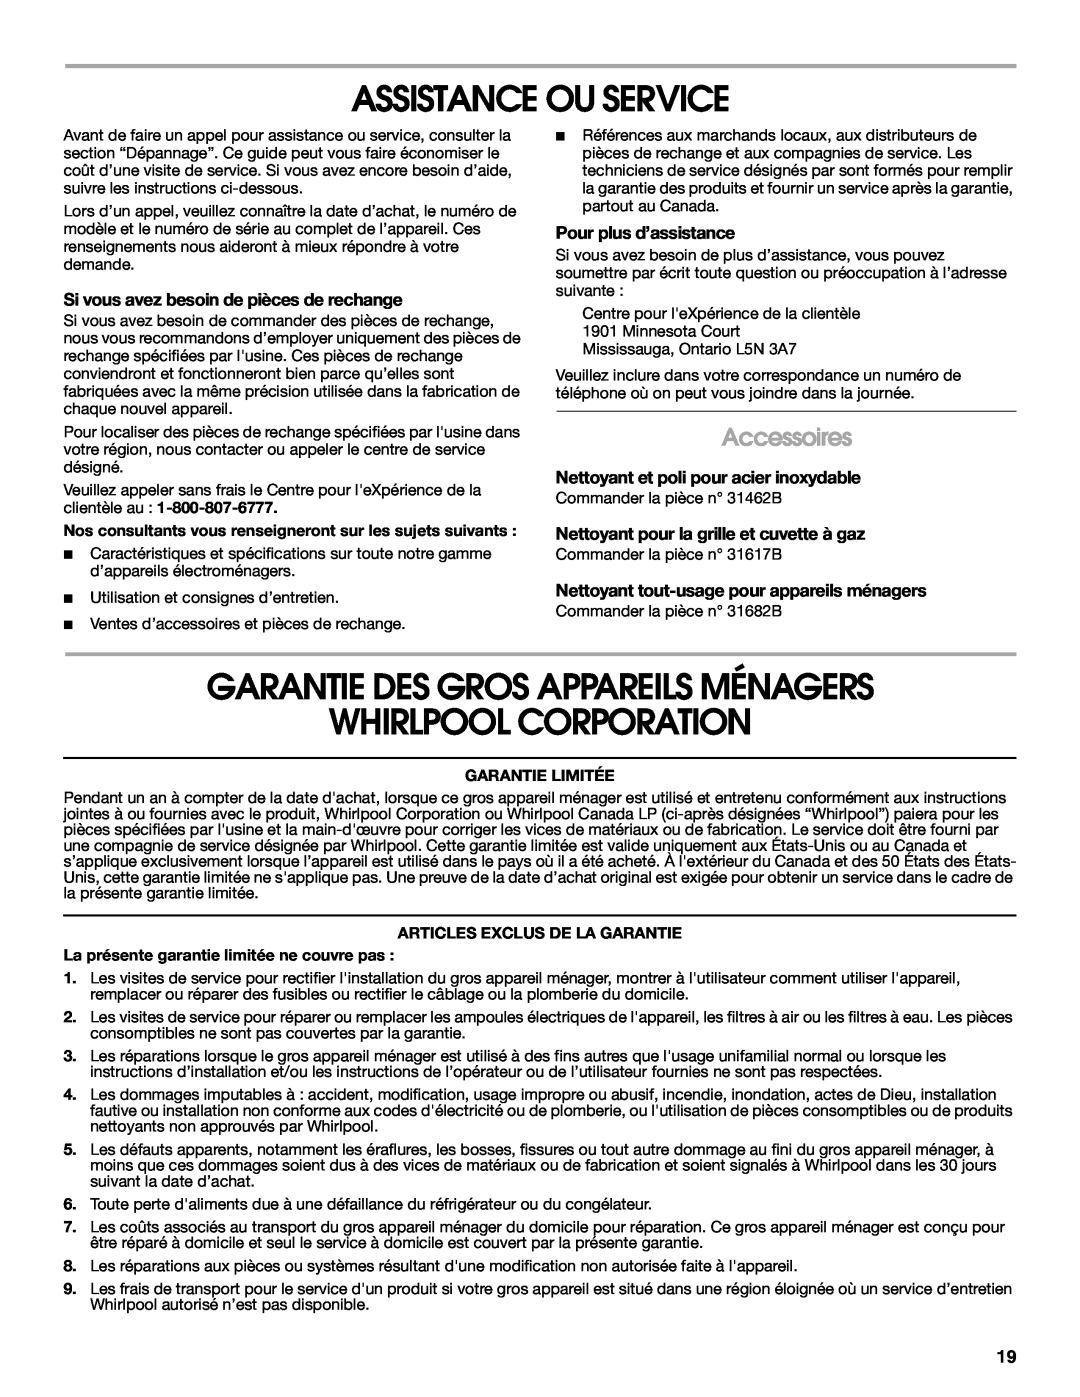 Maytag MGC8636WS manual Assistance Ou Service, Garantie Des Gros Appareils Ménagers Whirlpool Corporation, Accessoires 